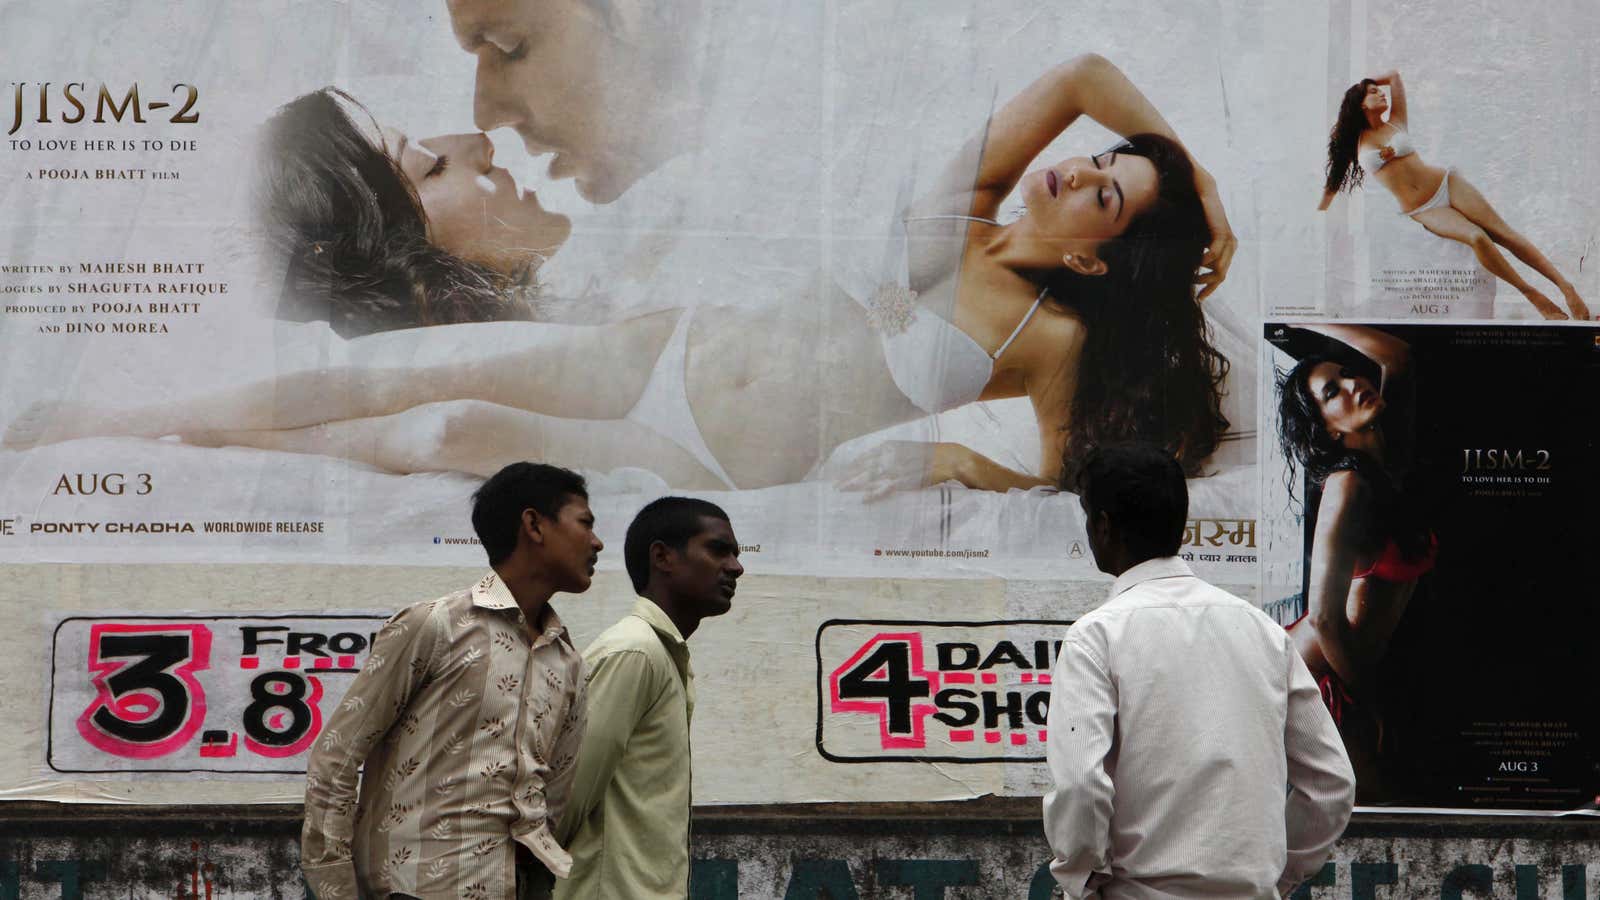 Hindi Ful Hdxxc - Hindi porn, Sunny Leone trended on Pornhub India in 2018